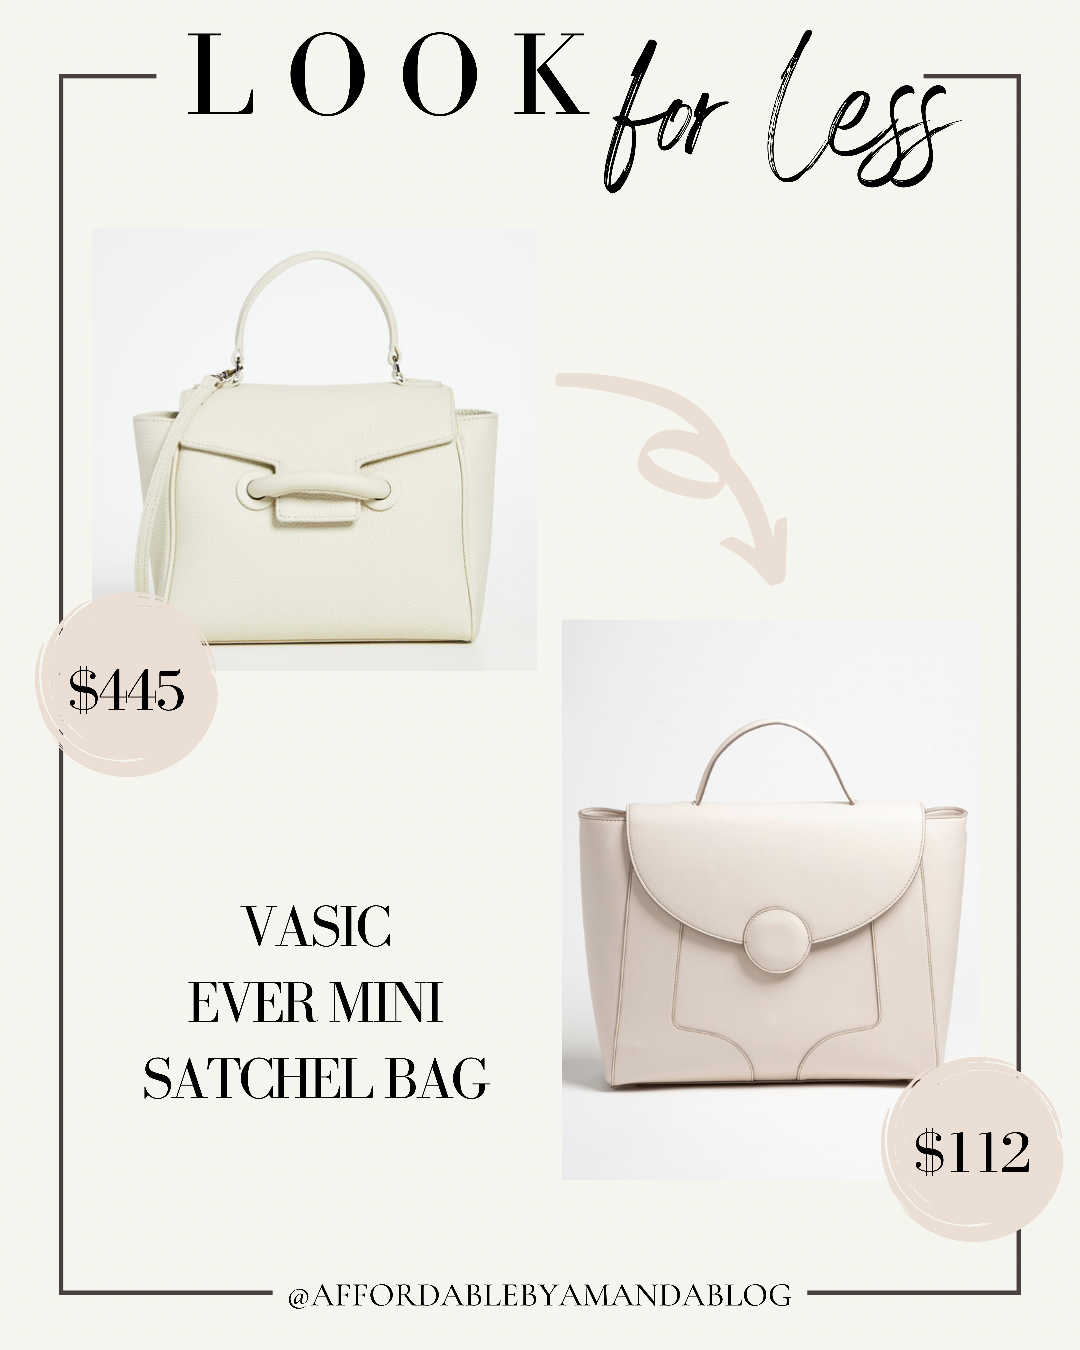 Vasic Ever Mini Satchel Bag | Shopbop | Affordable by Amanda